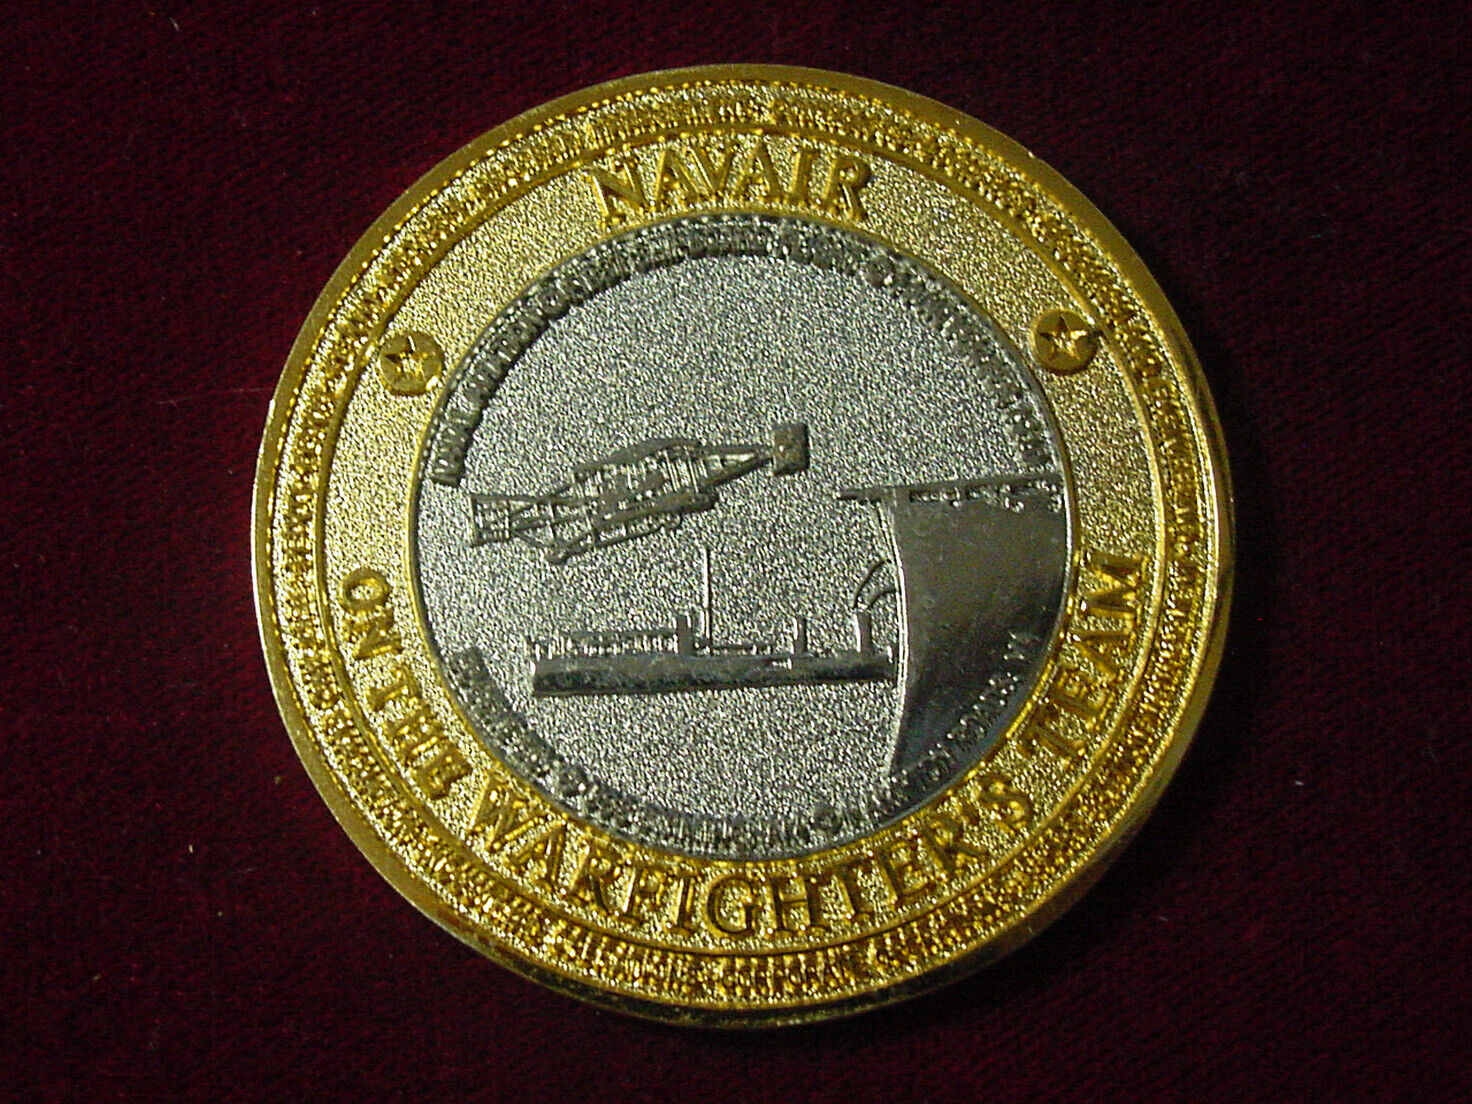 NAVAIR NAVAL AIR SYSTEMS COMMAND CHALLENGE COIN - WARFIGHTER'S TEAM